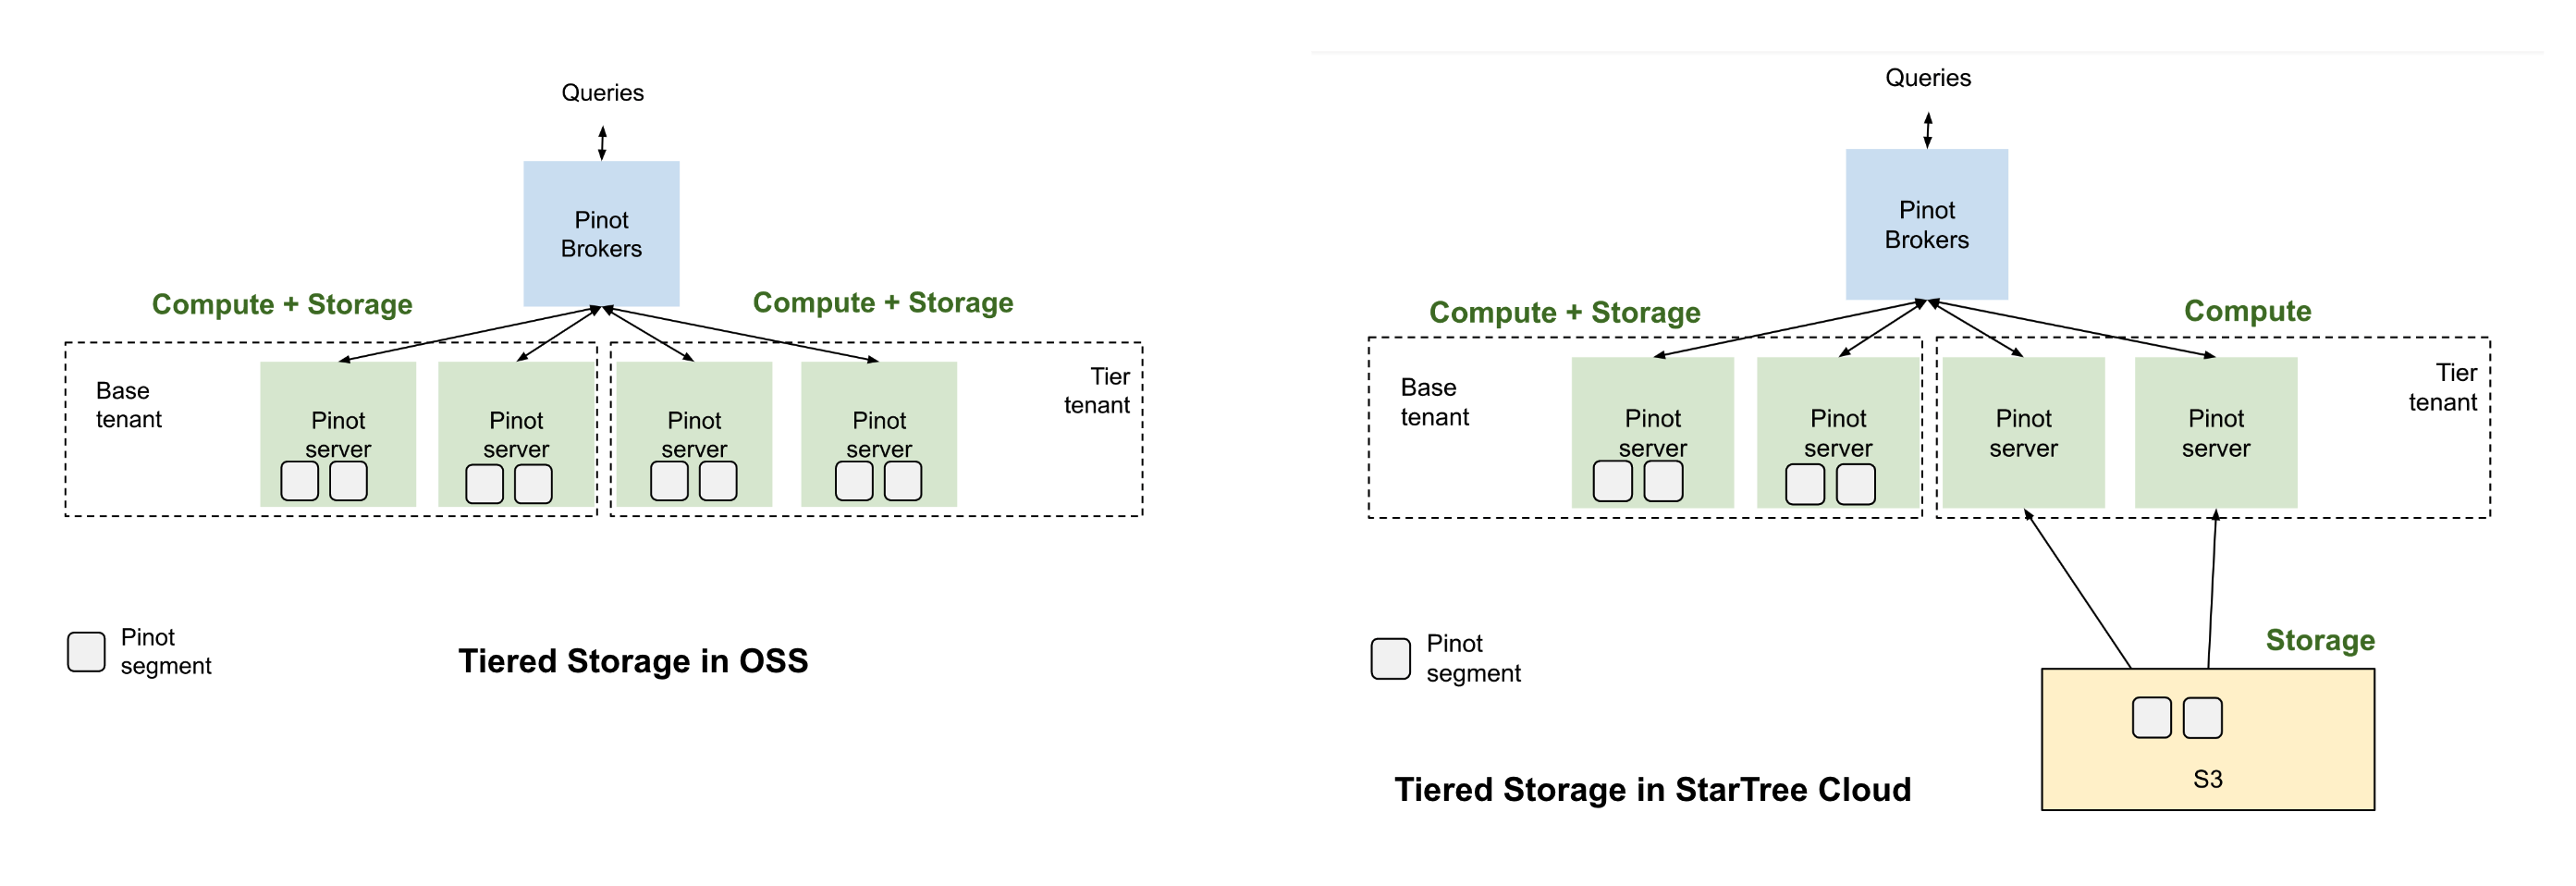 Tiered storage in oss vs in StarTree Cloud